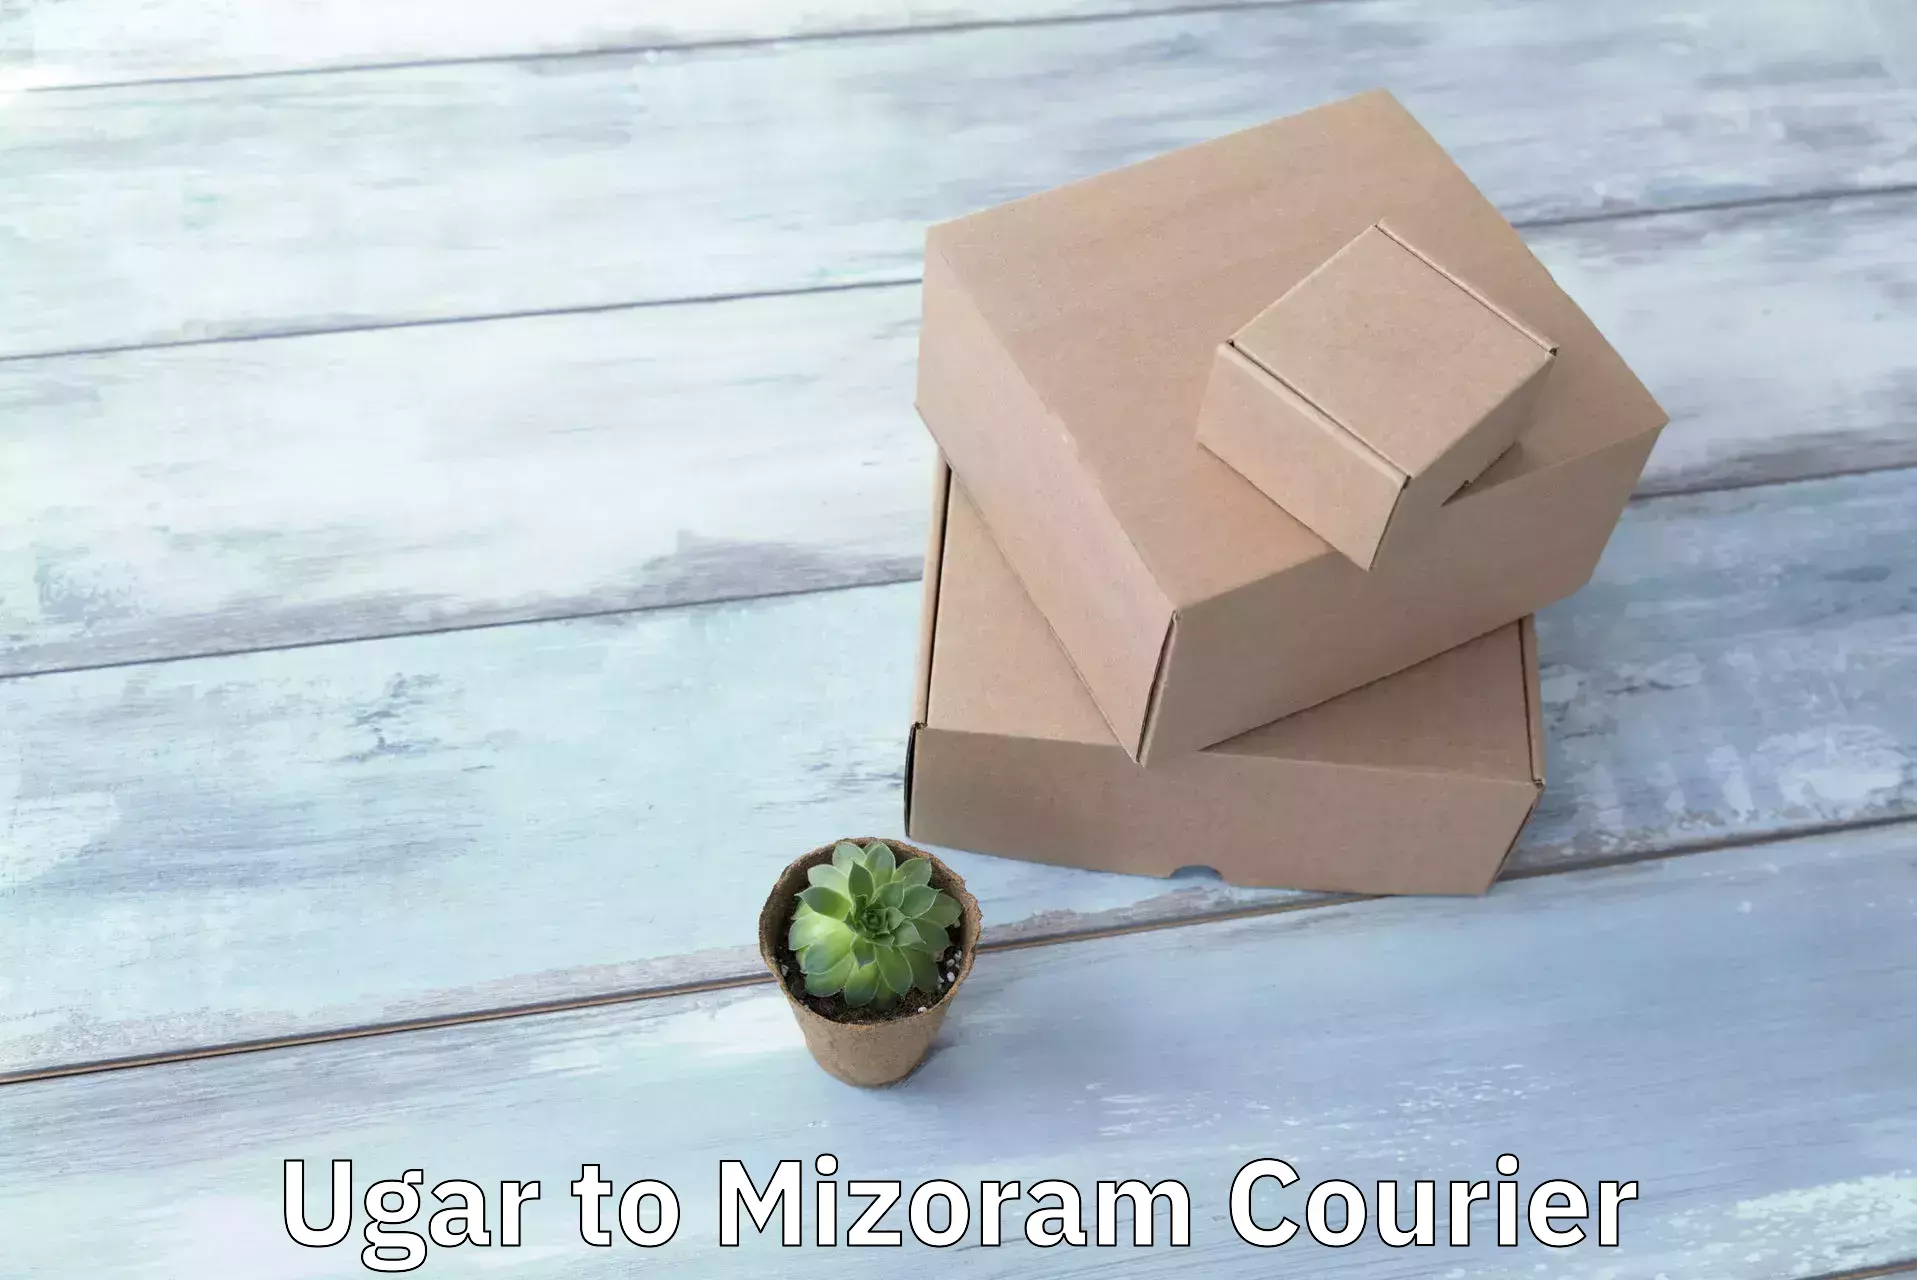 Courier service comparison Ugar to Mizoram